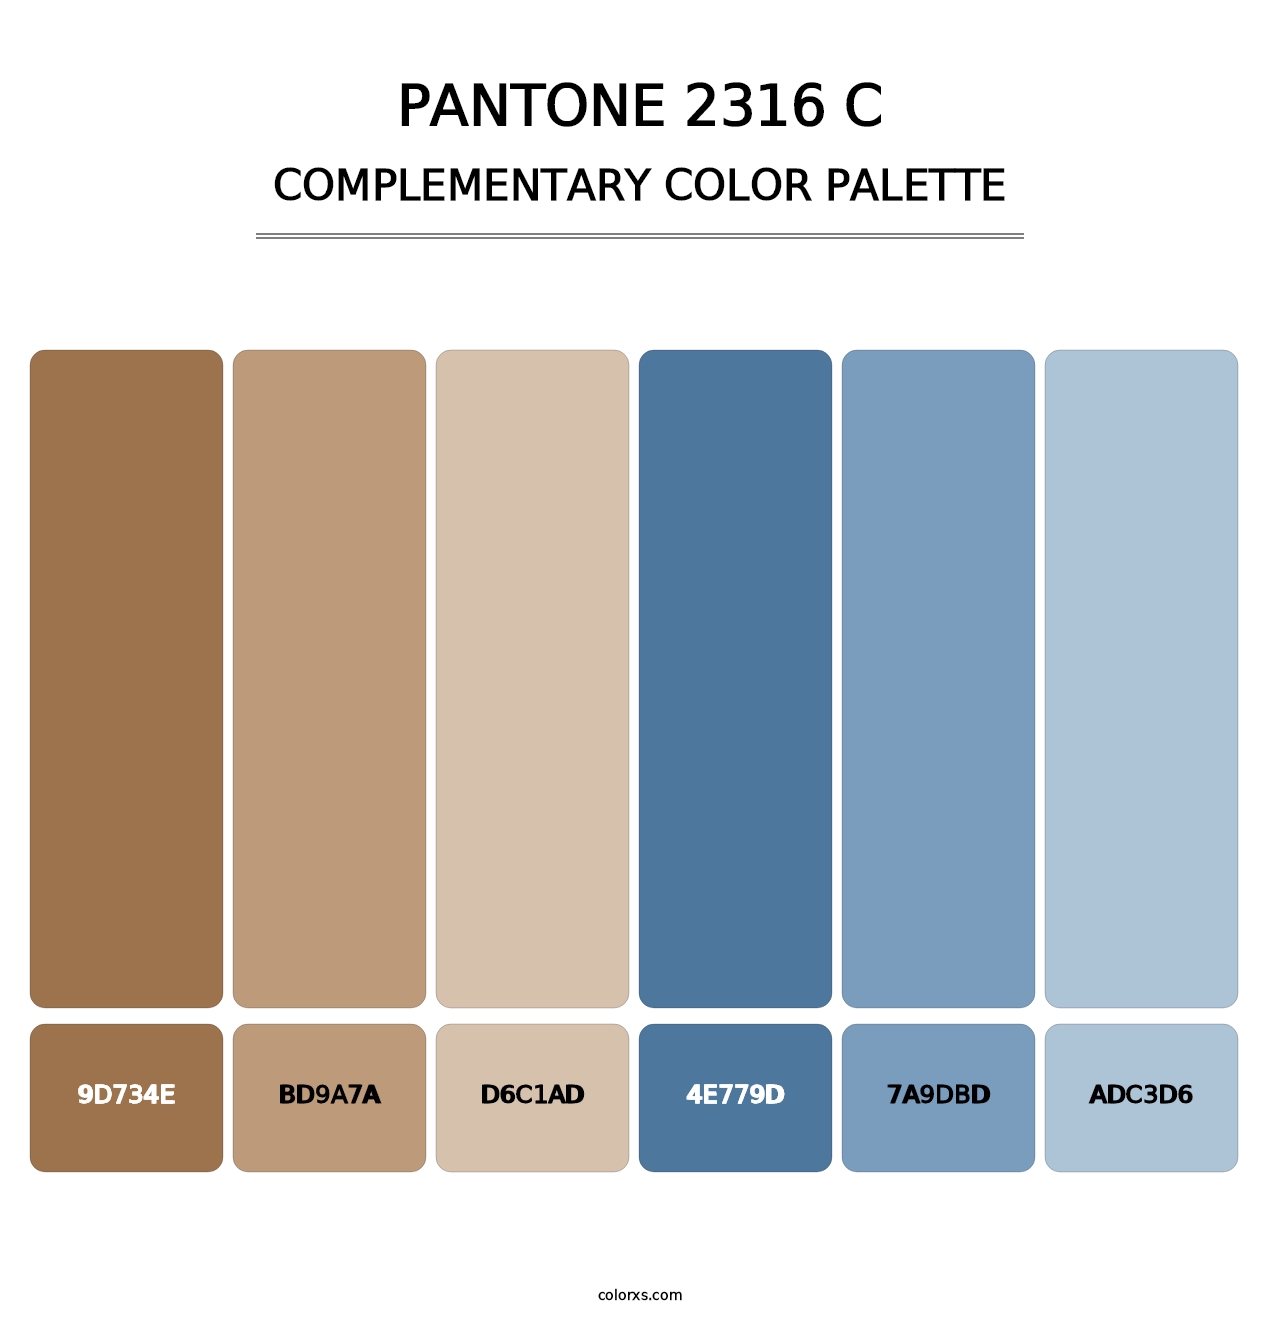 PANTONE 2316 C - Complementary Color Palette